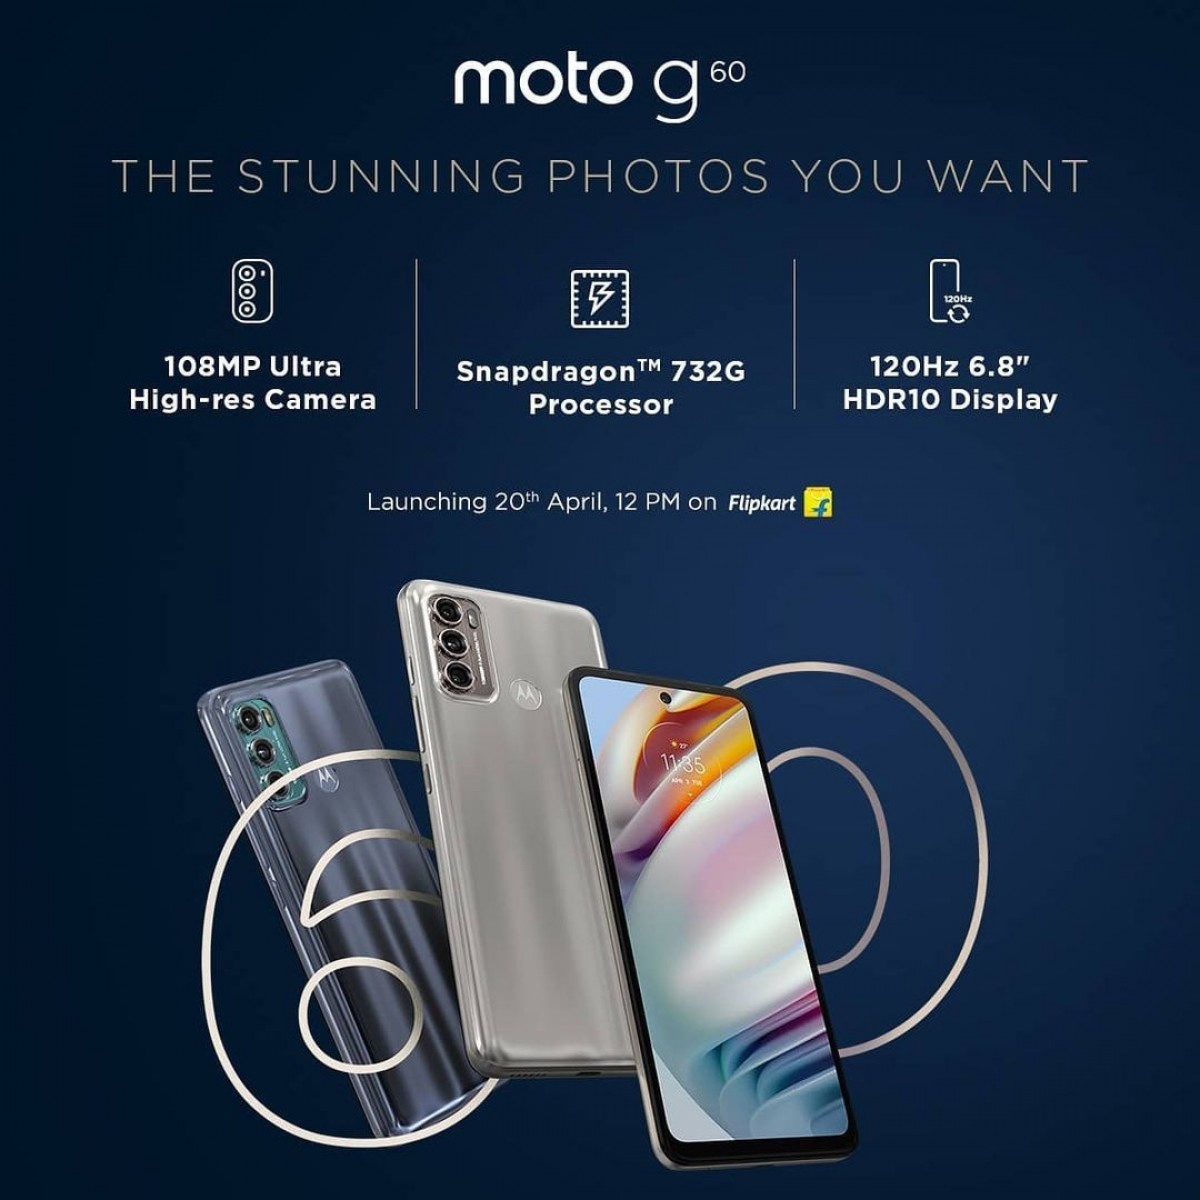 Motorola teases Moto G60 and Moto G40 Fusion key features